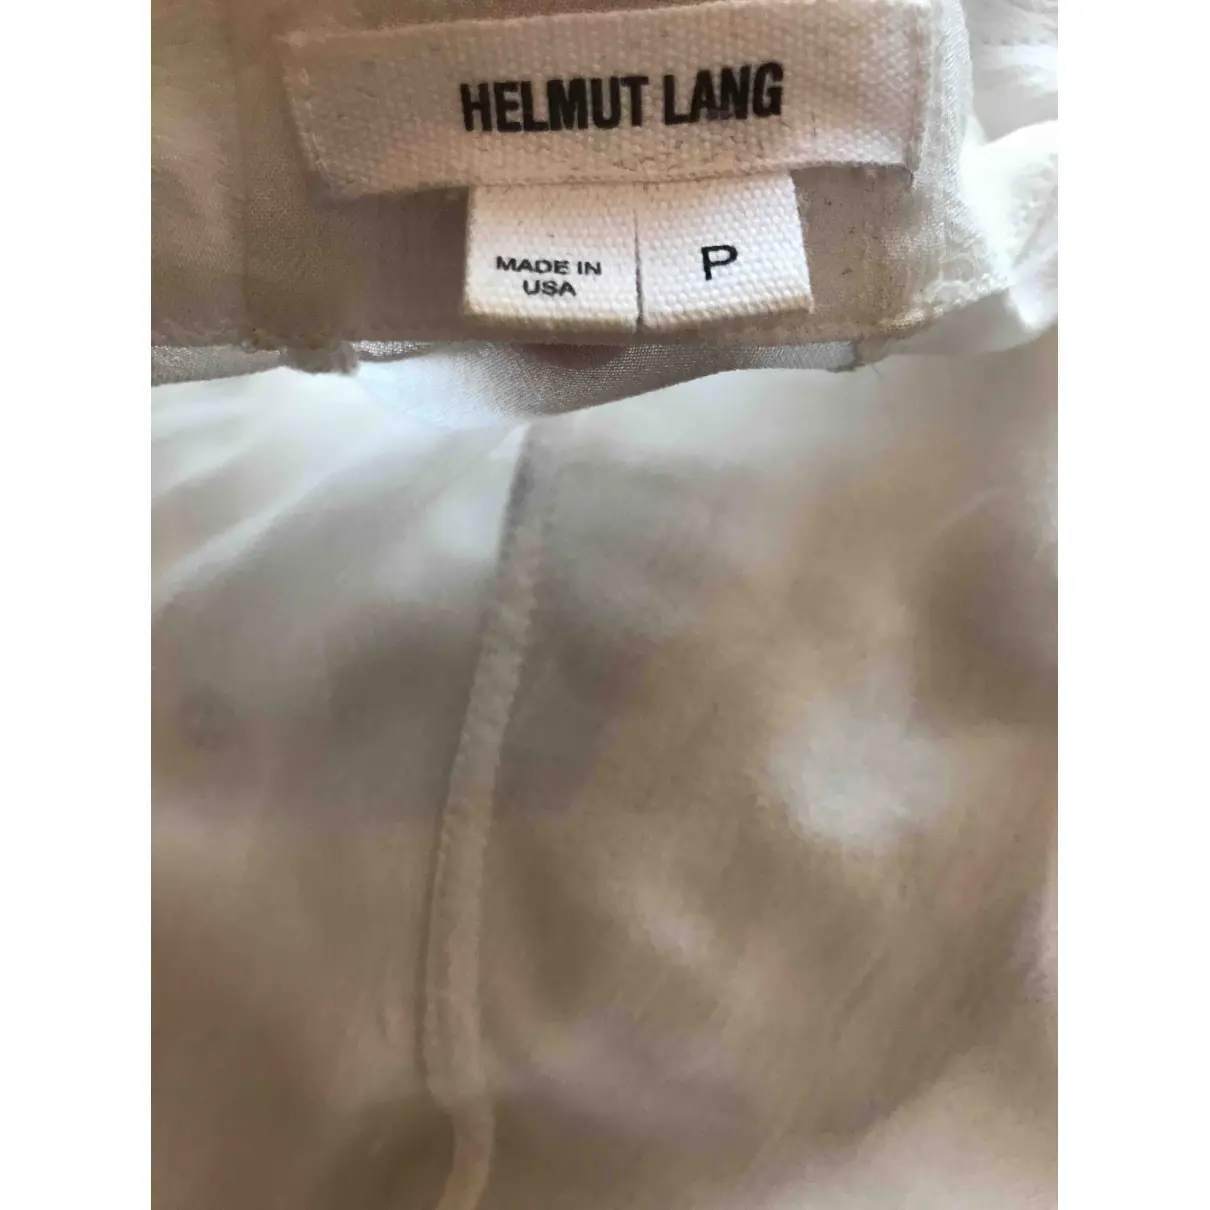 Helmut Lang Shirt for sale